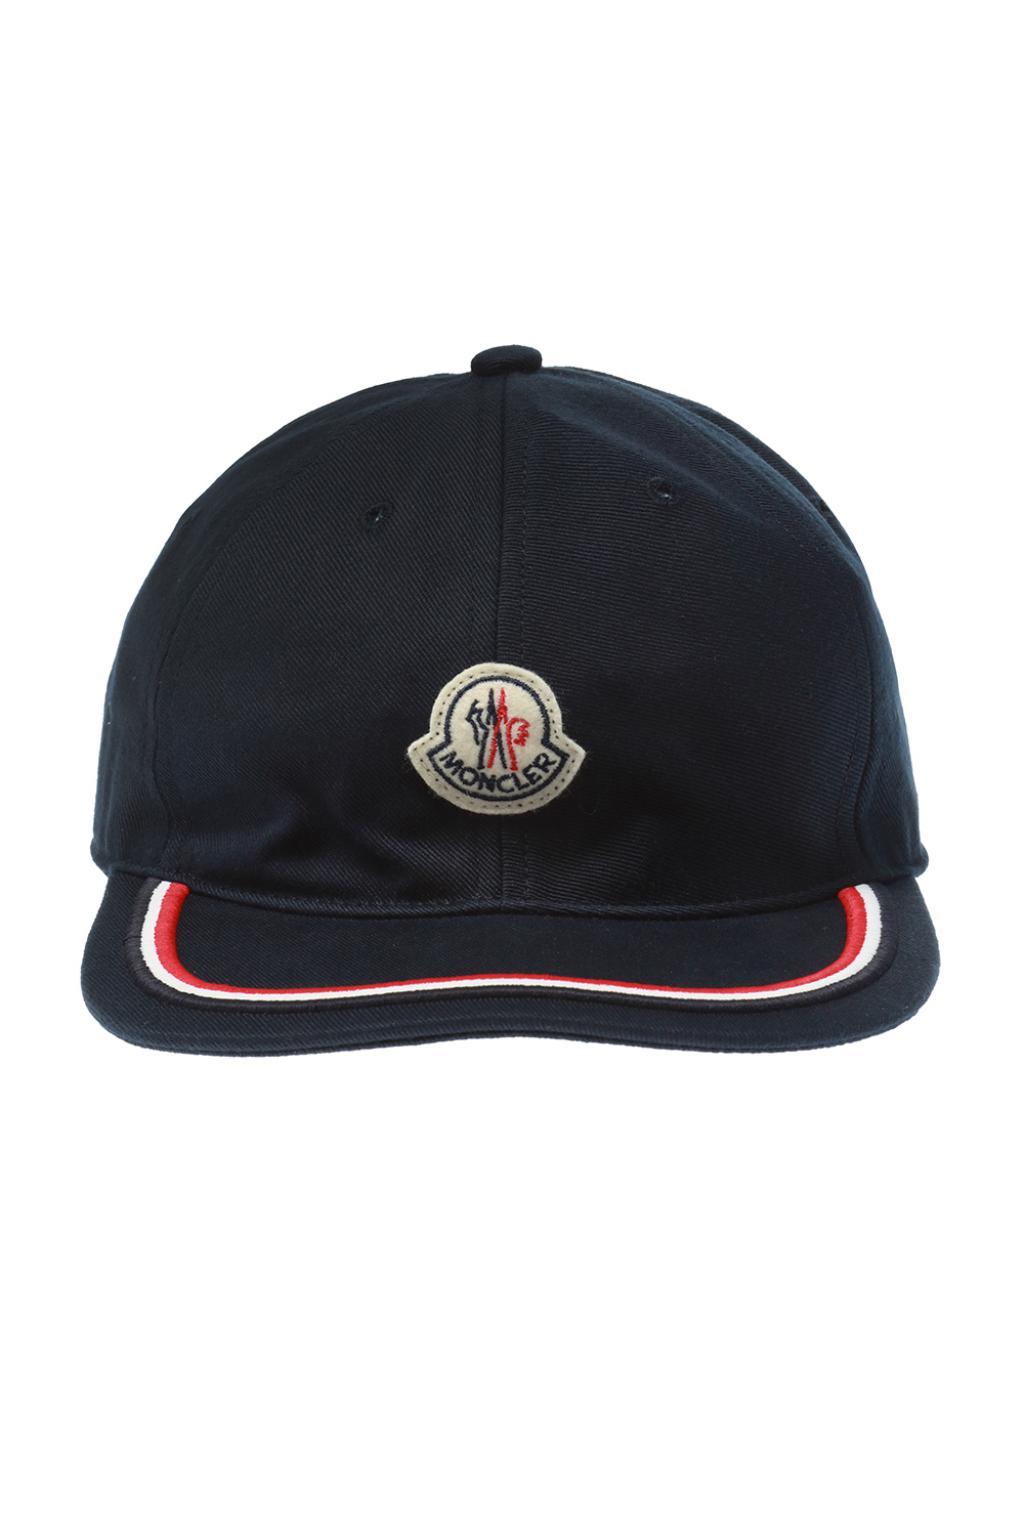 Moncler Baseball Cap With Logo in Blue for Men - Lyst